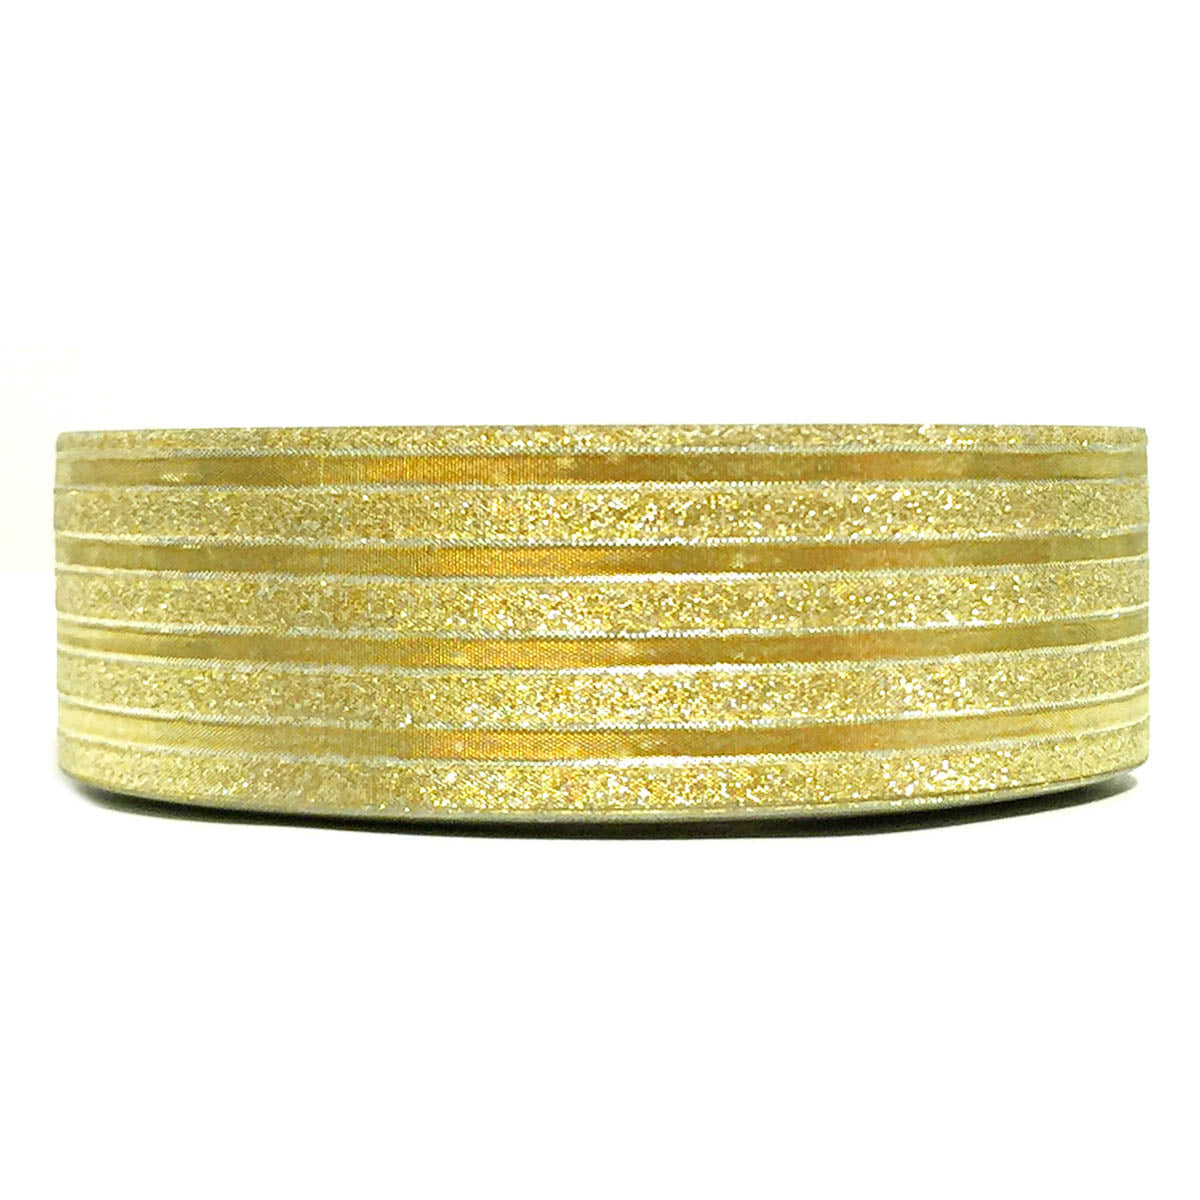 Wrapables Colorful Patterns Washi Masking Tape, Reflective Gold Ribbon